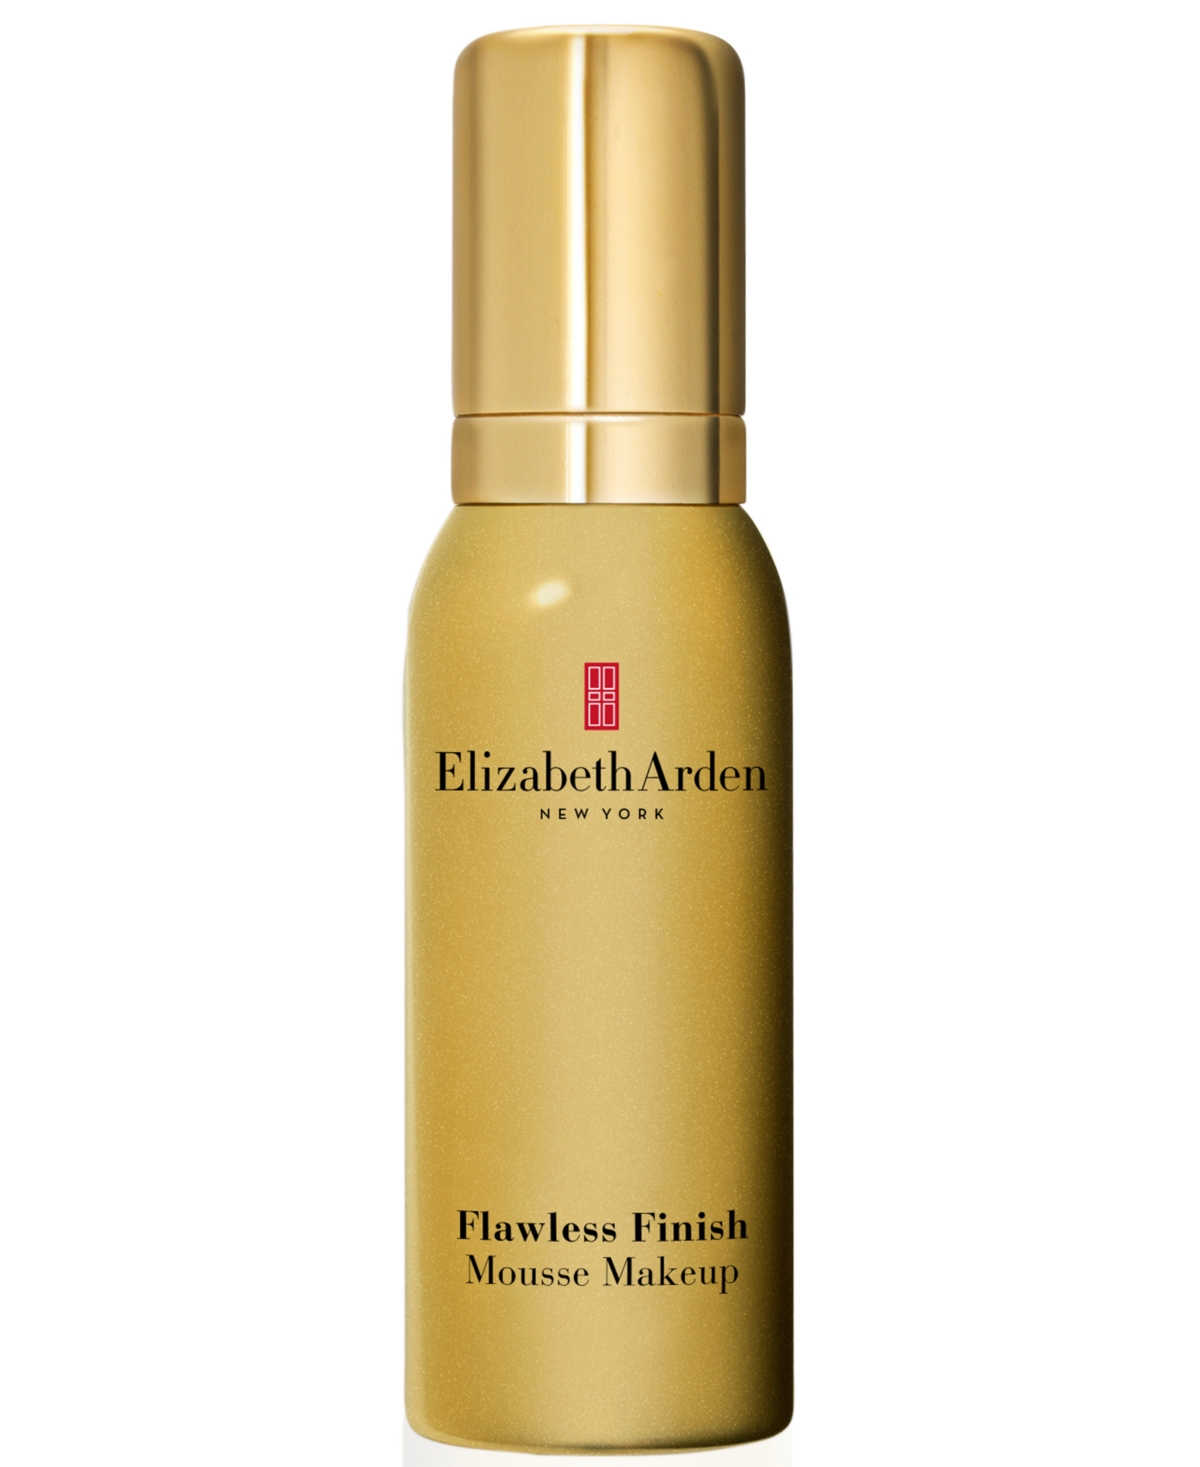 Elizabeth Arden Flawless Finish Mousse Makeup, 1.4 oz.